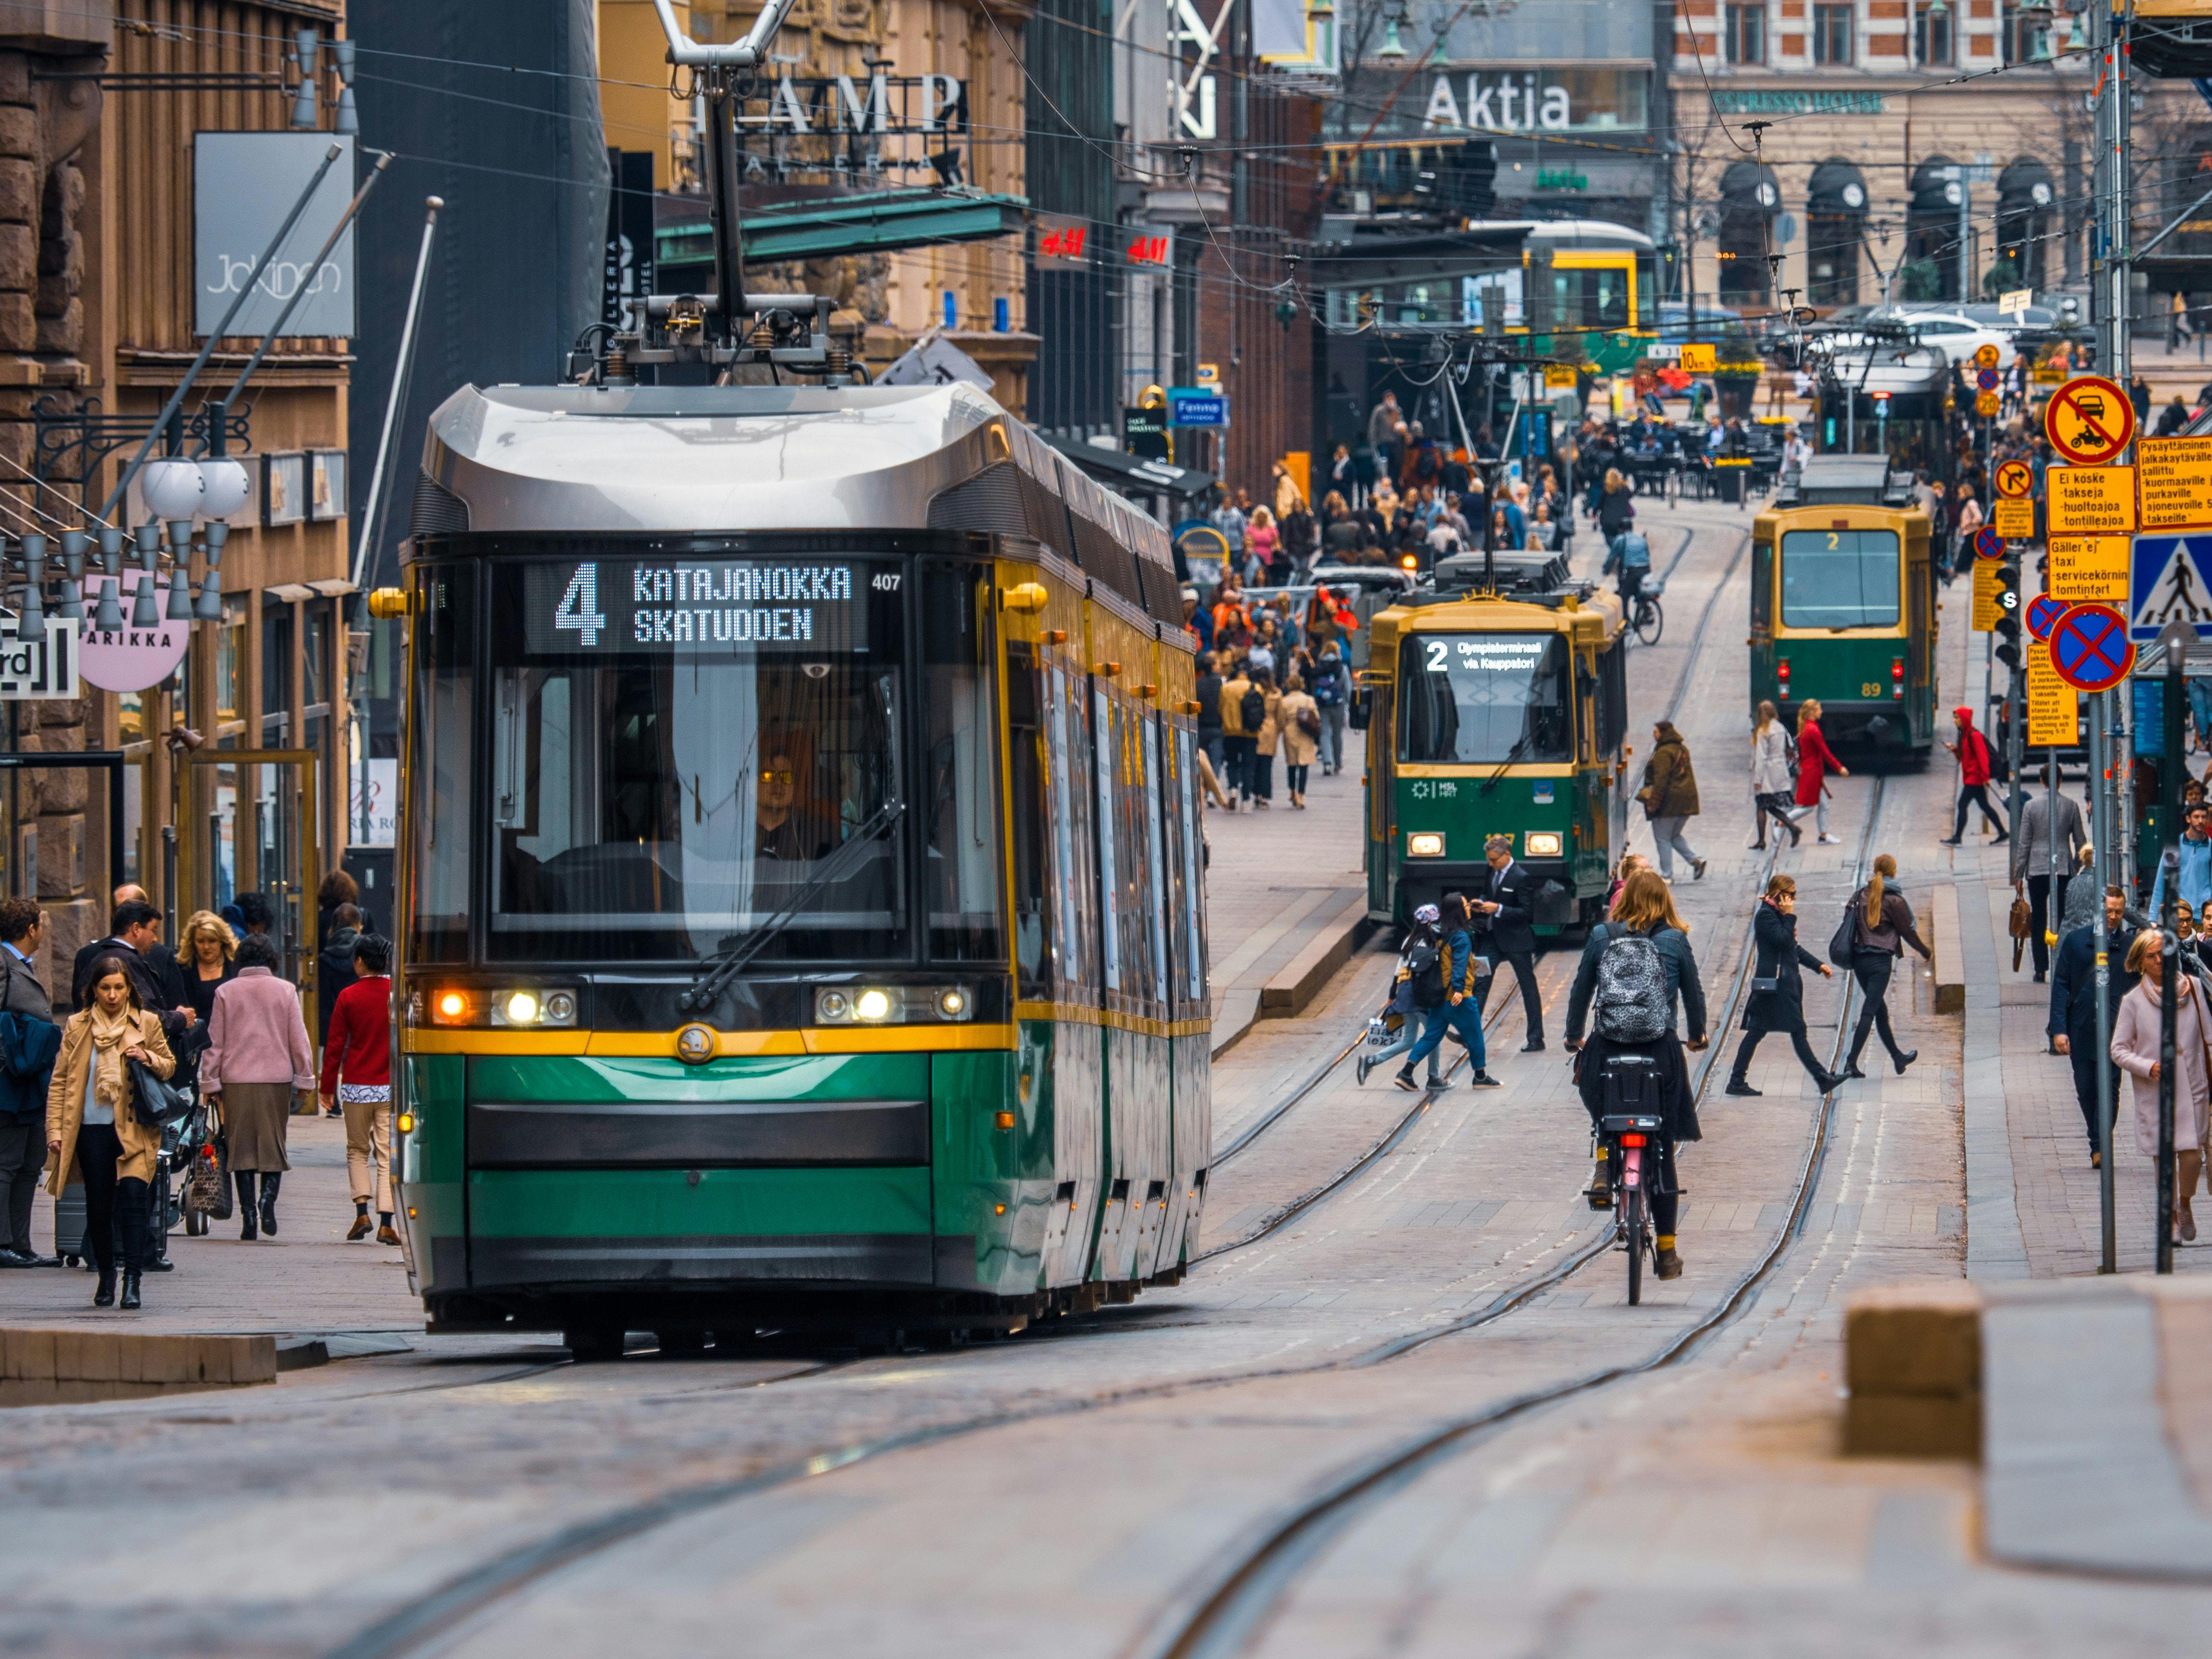 Visite en tramway d'Helsinki